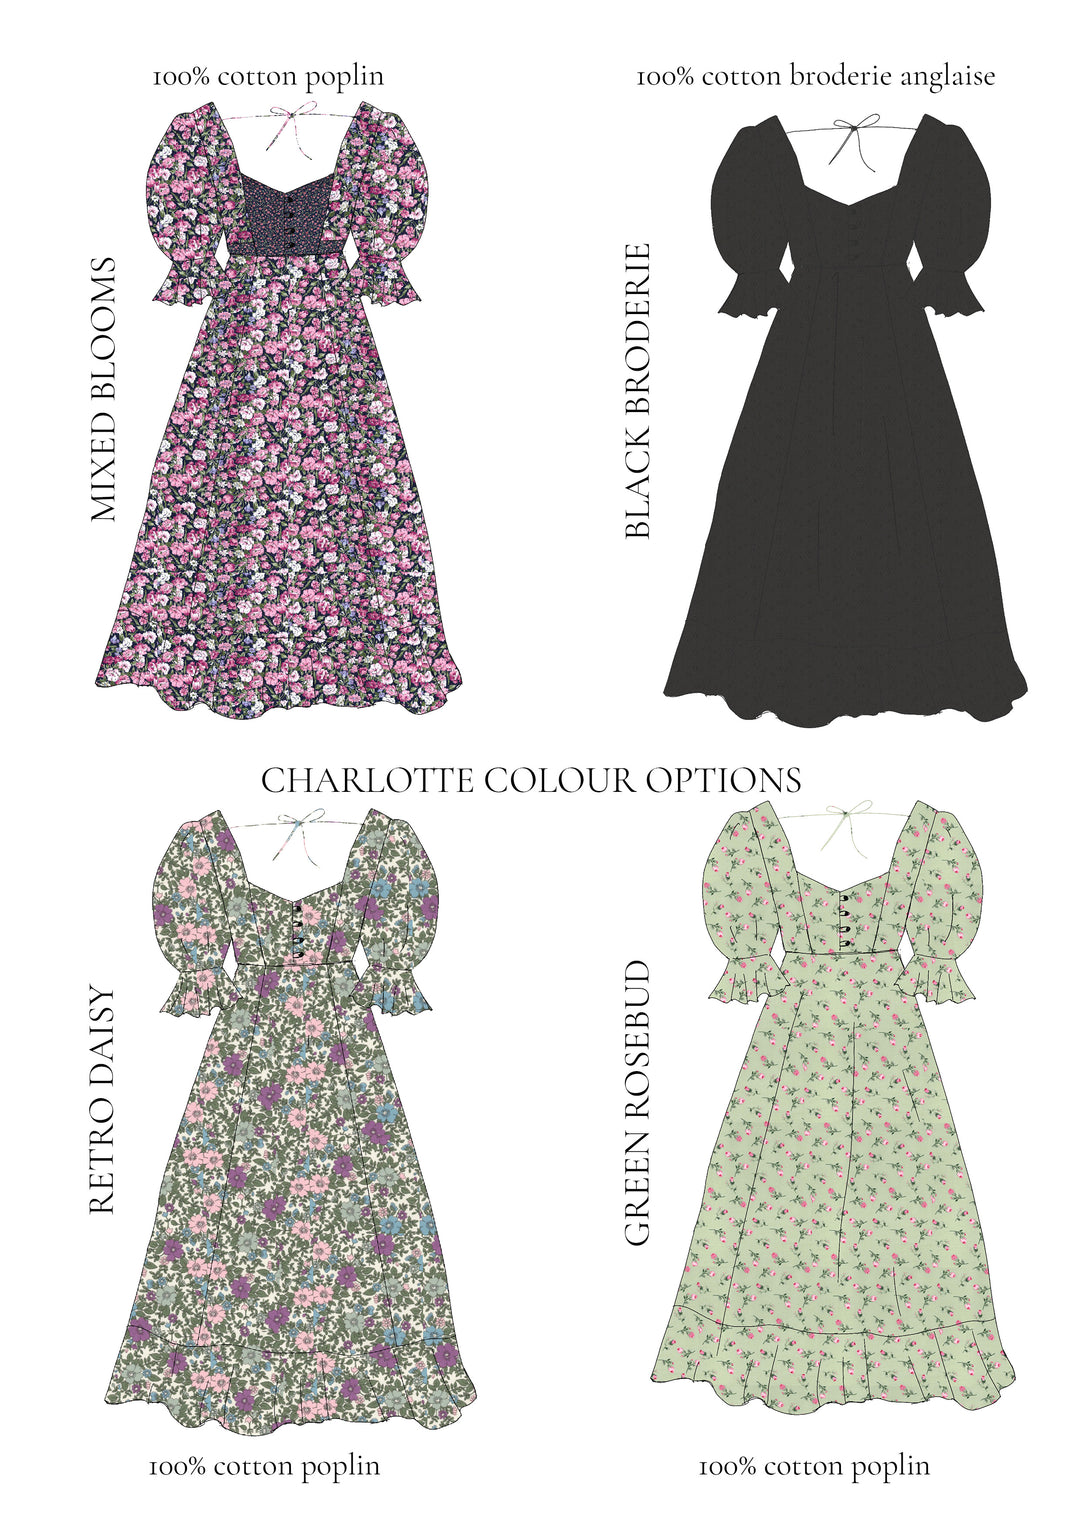 The Charlotte Dress